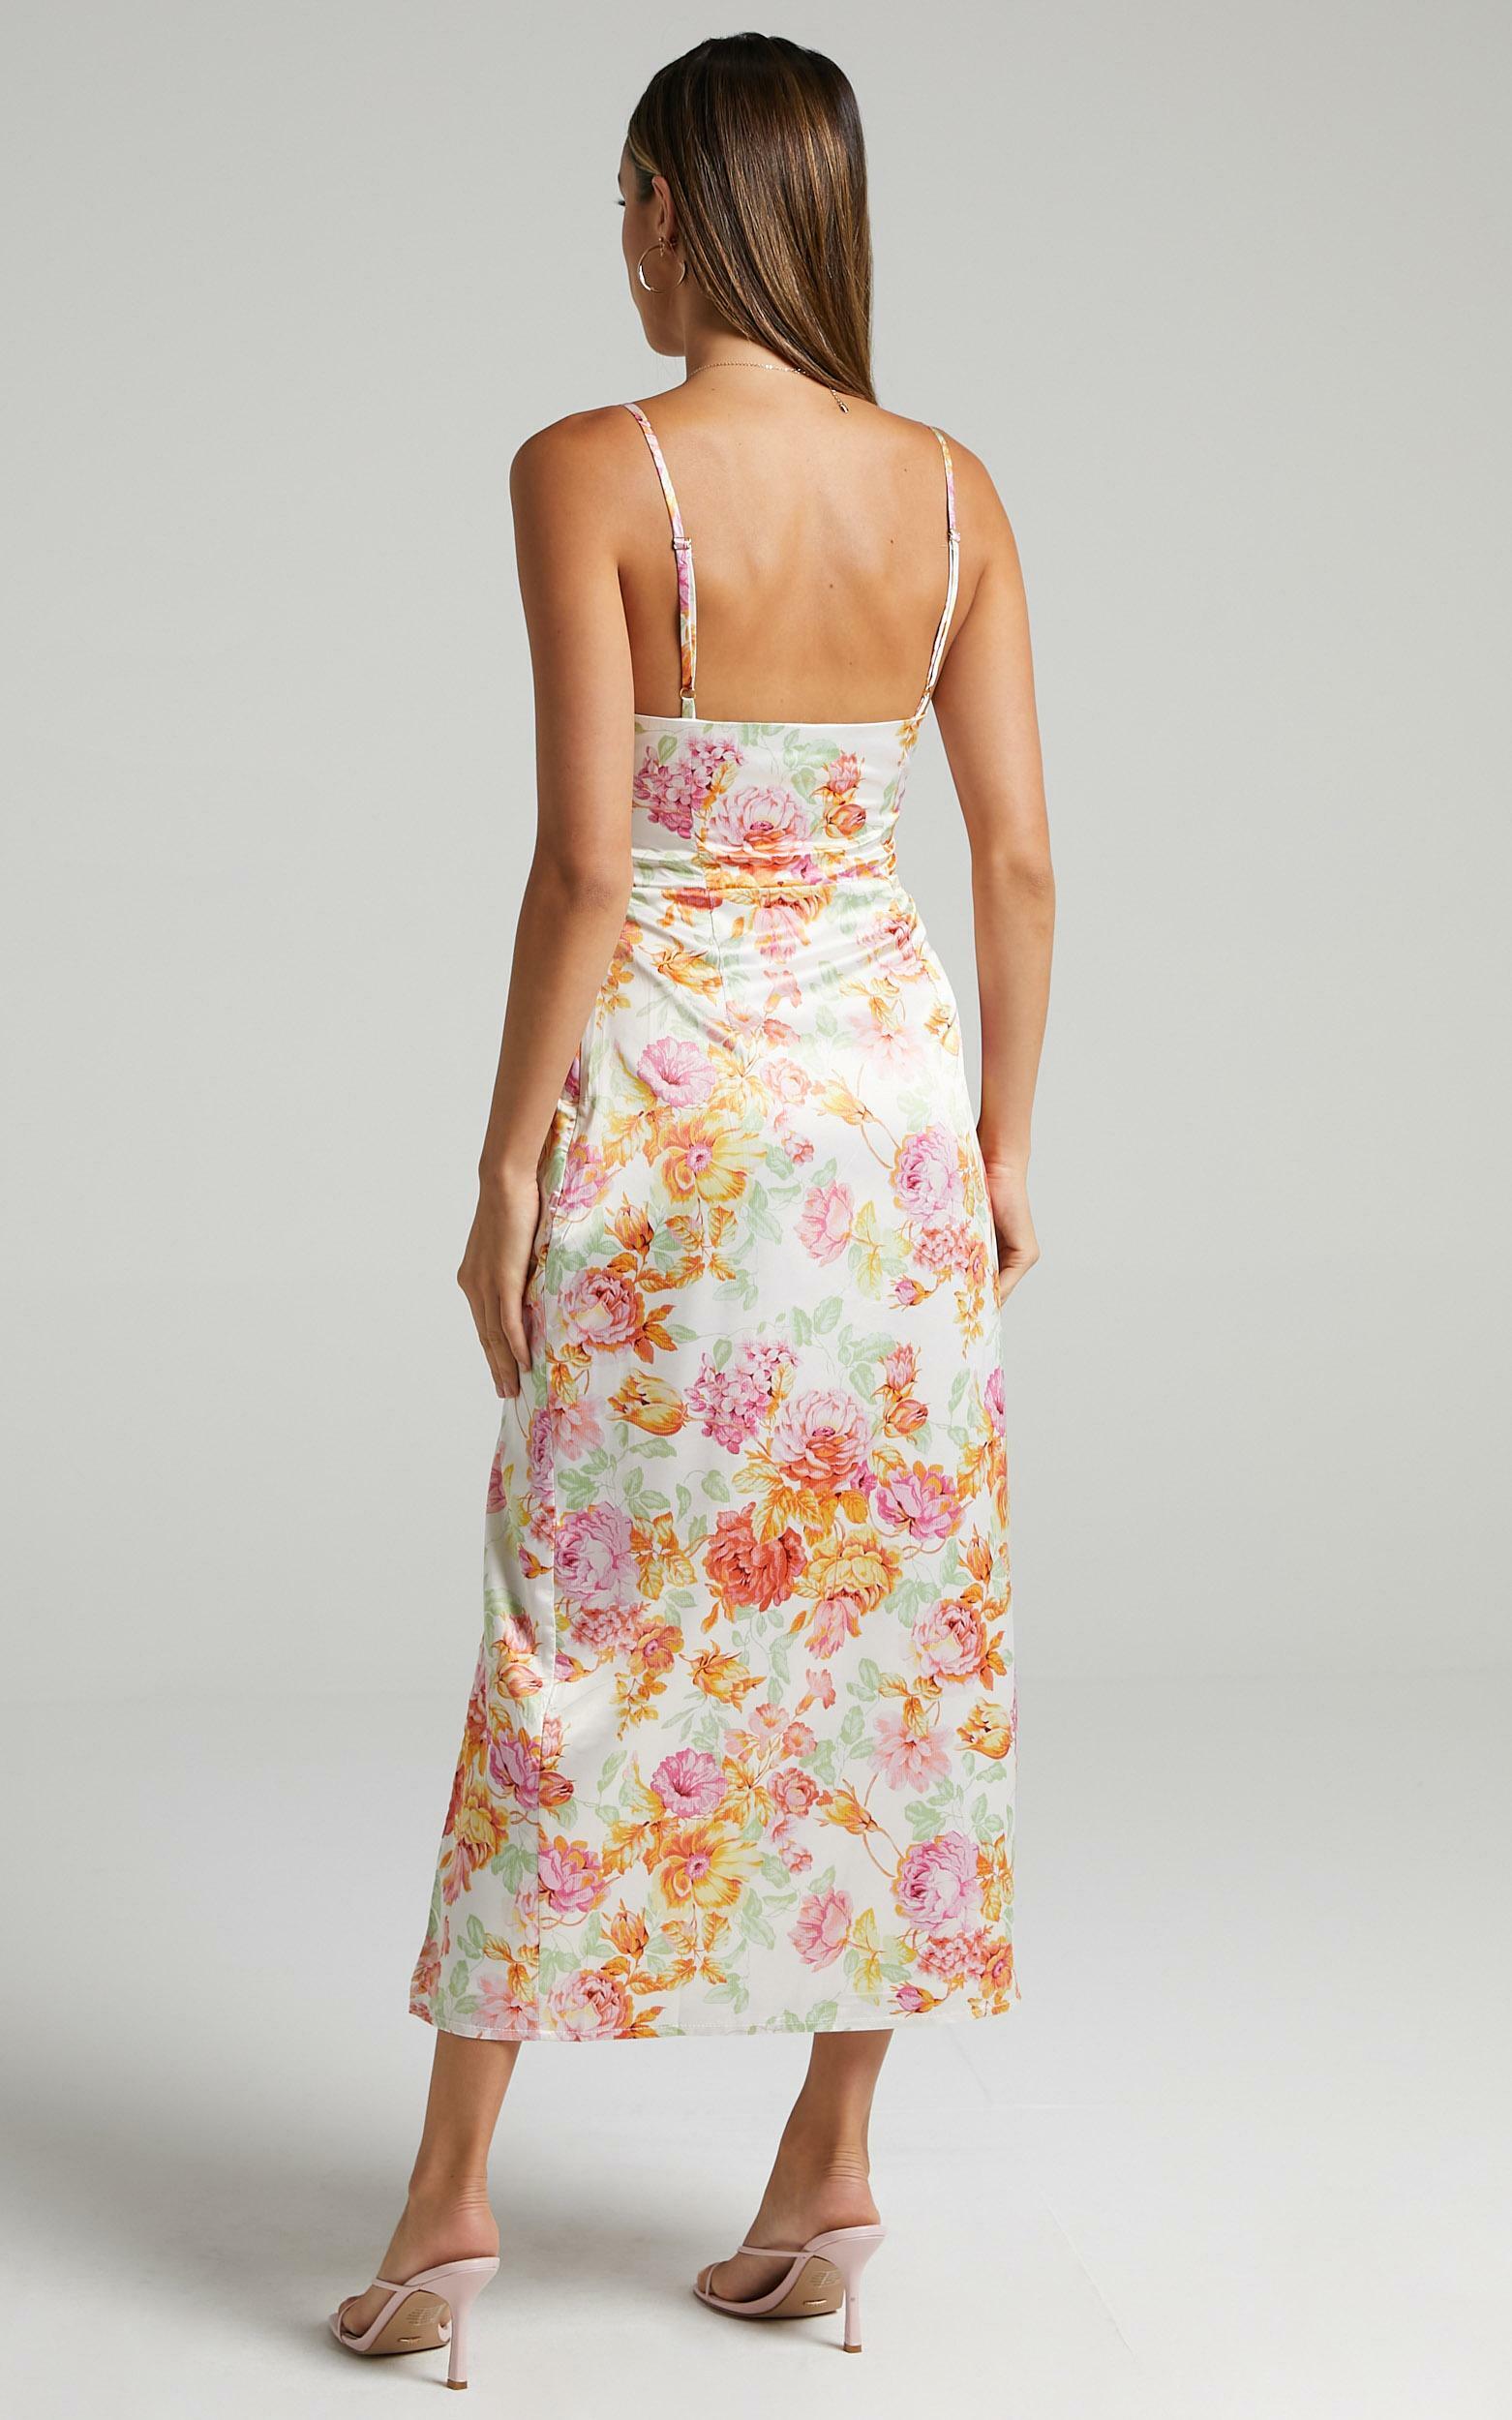 Annabeth Dress in Romantic Floral | Showpo USA